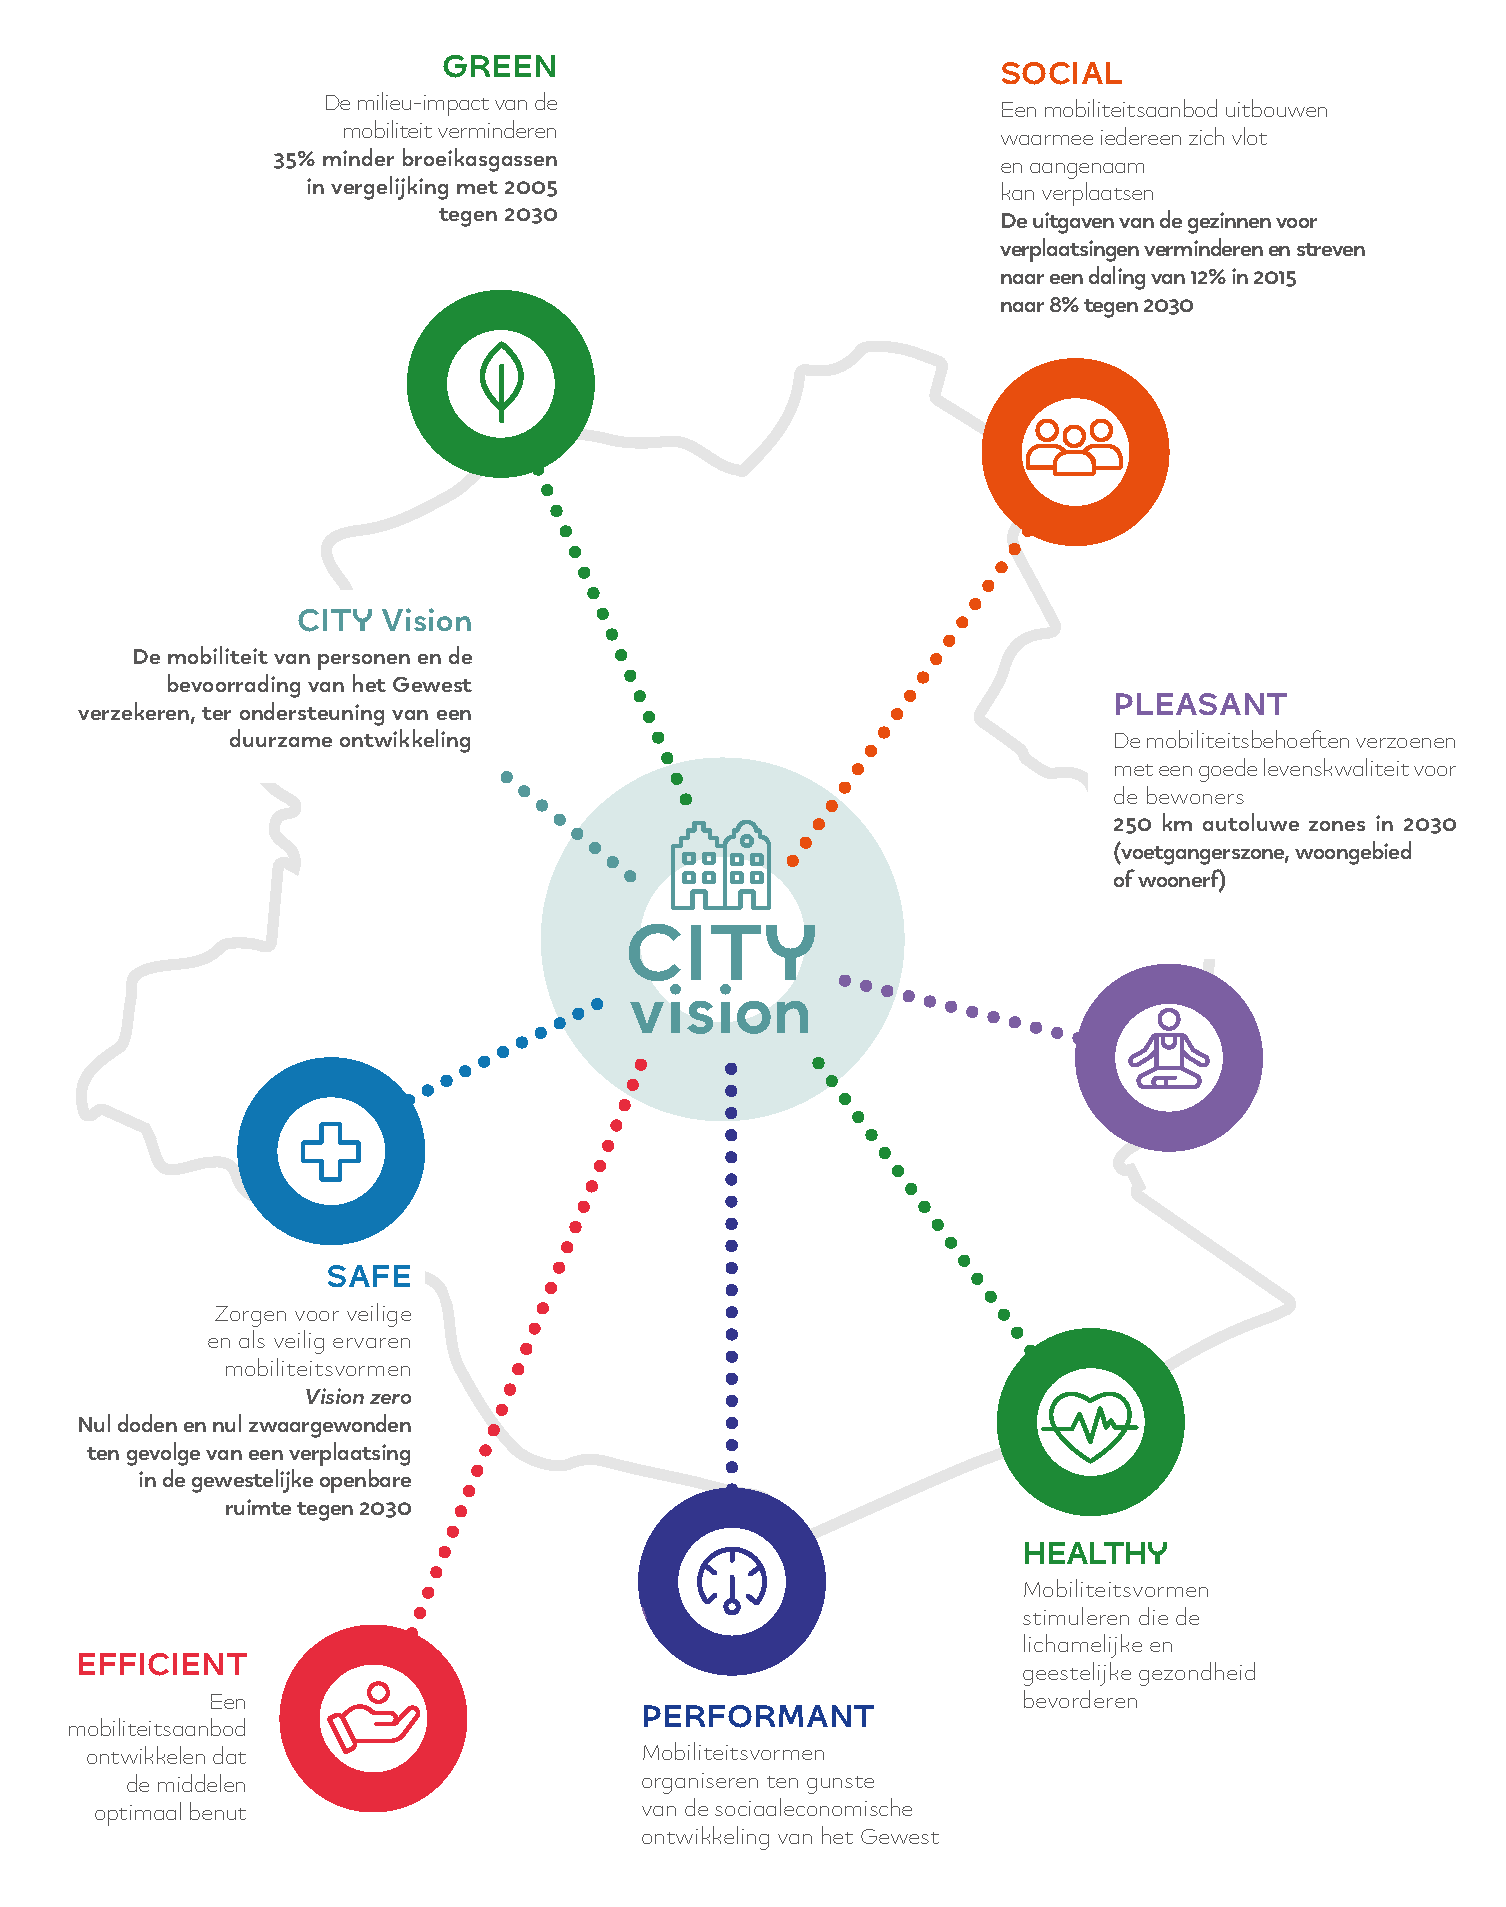 De city vision heeft 7 focuspunten : Green, social, pleasant, healthy, performant, efficient et safe.